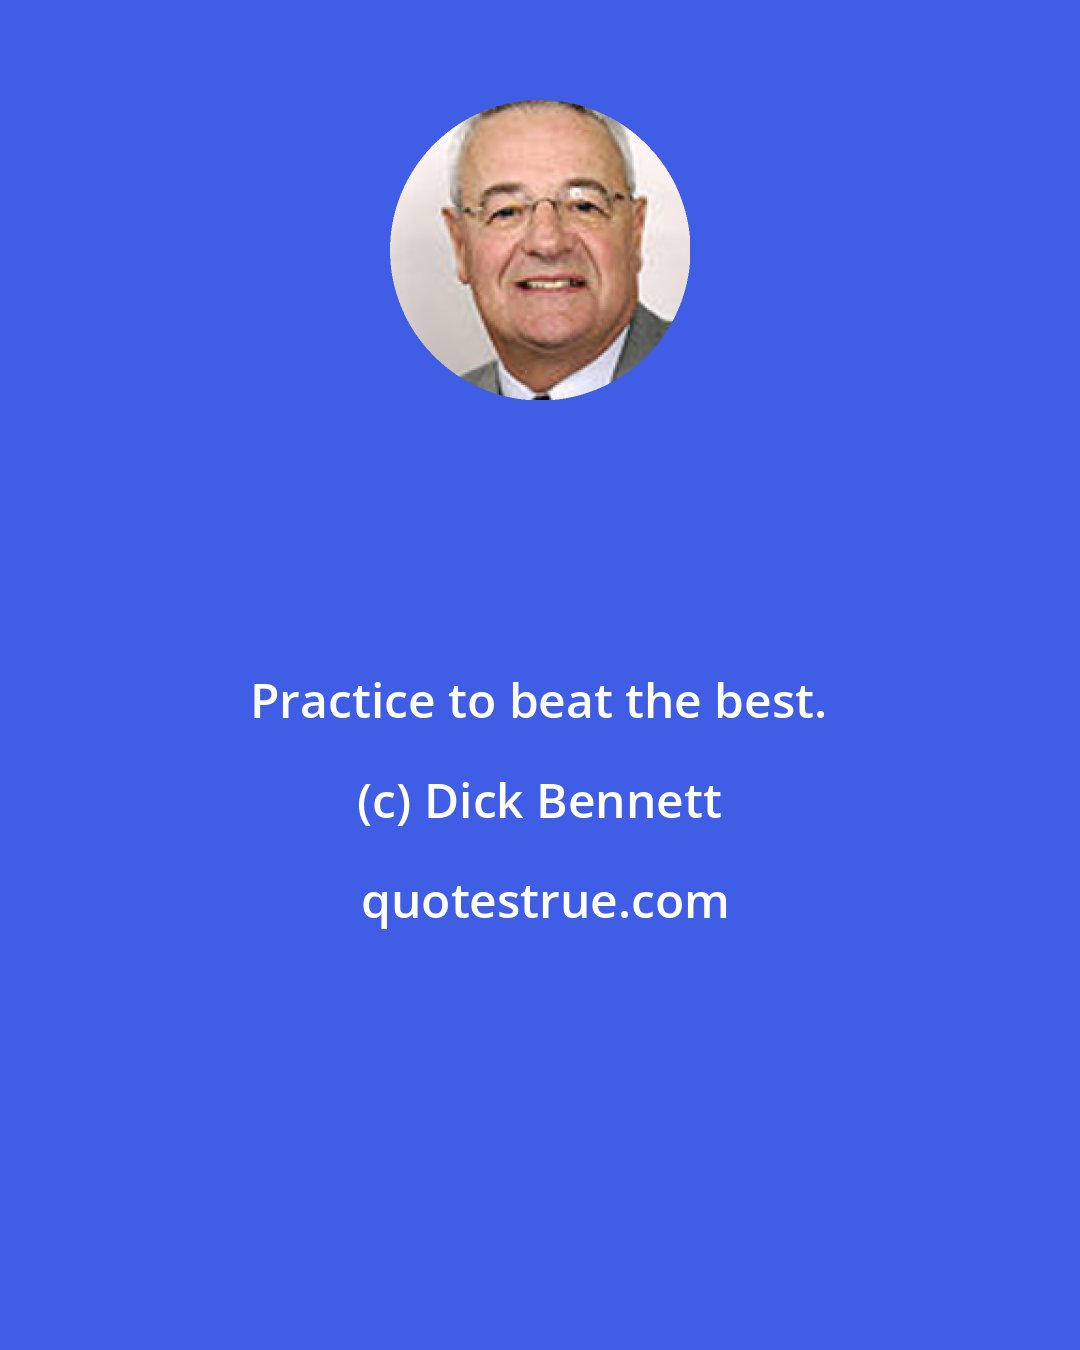 Dick Bennett: Practice to beat the best.